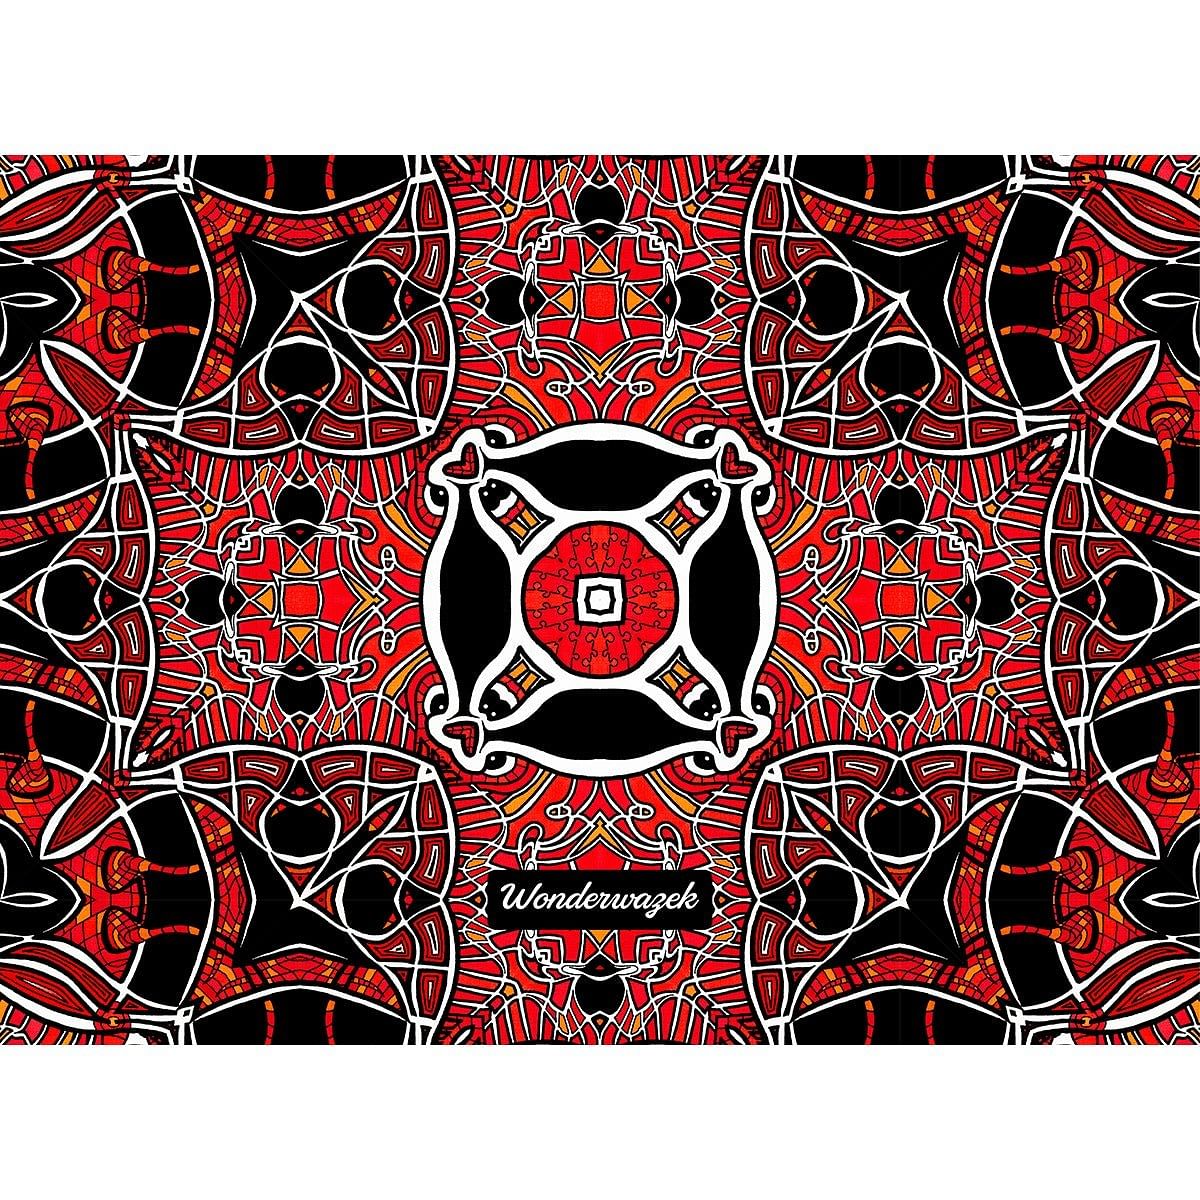 Laptoptasche • Zirkus – Kaleidoskop 1, rot, schwarz, weiß - Wonderwazek